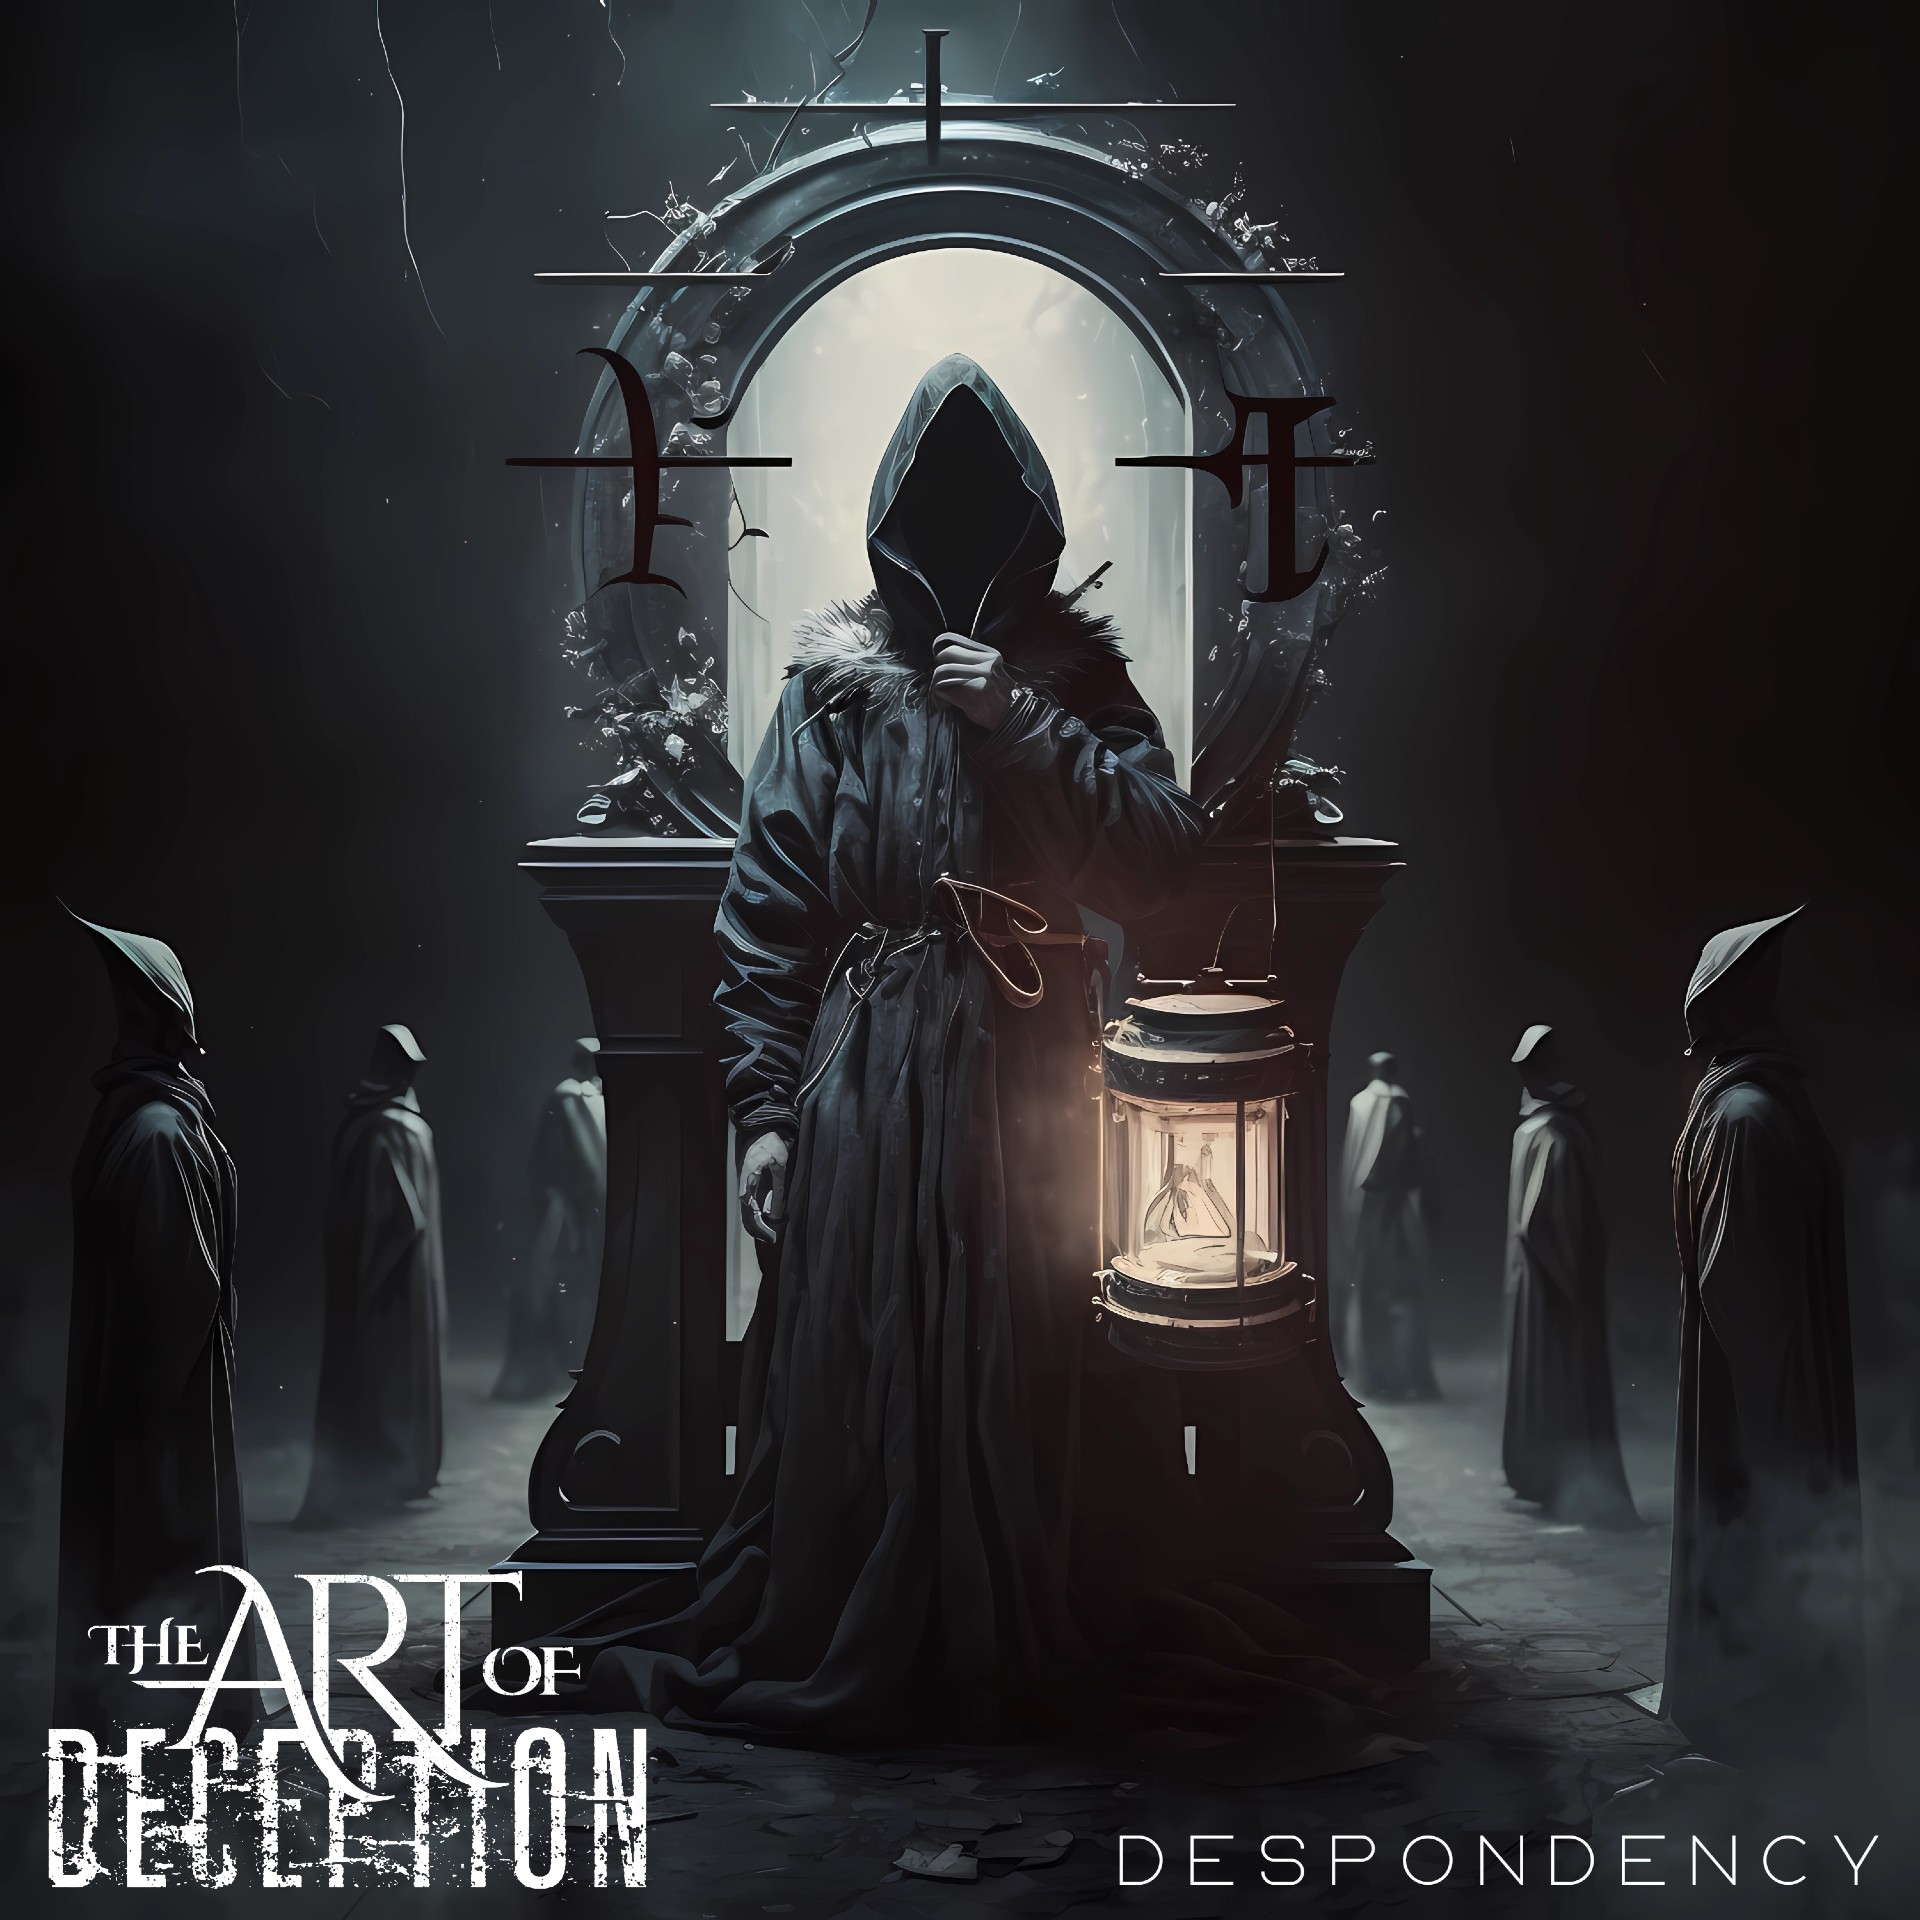 The Art of Deception “Despondency” single artwork